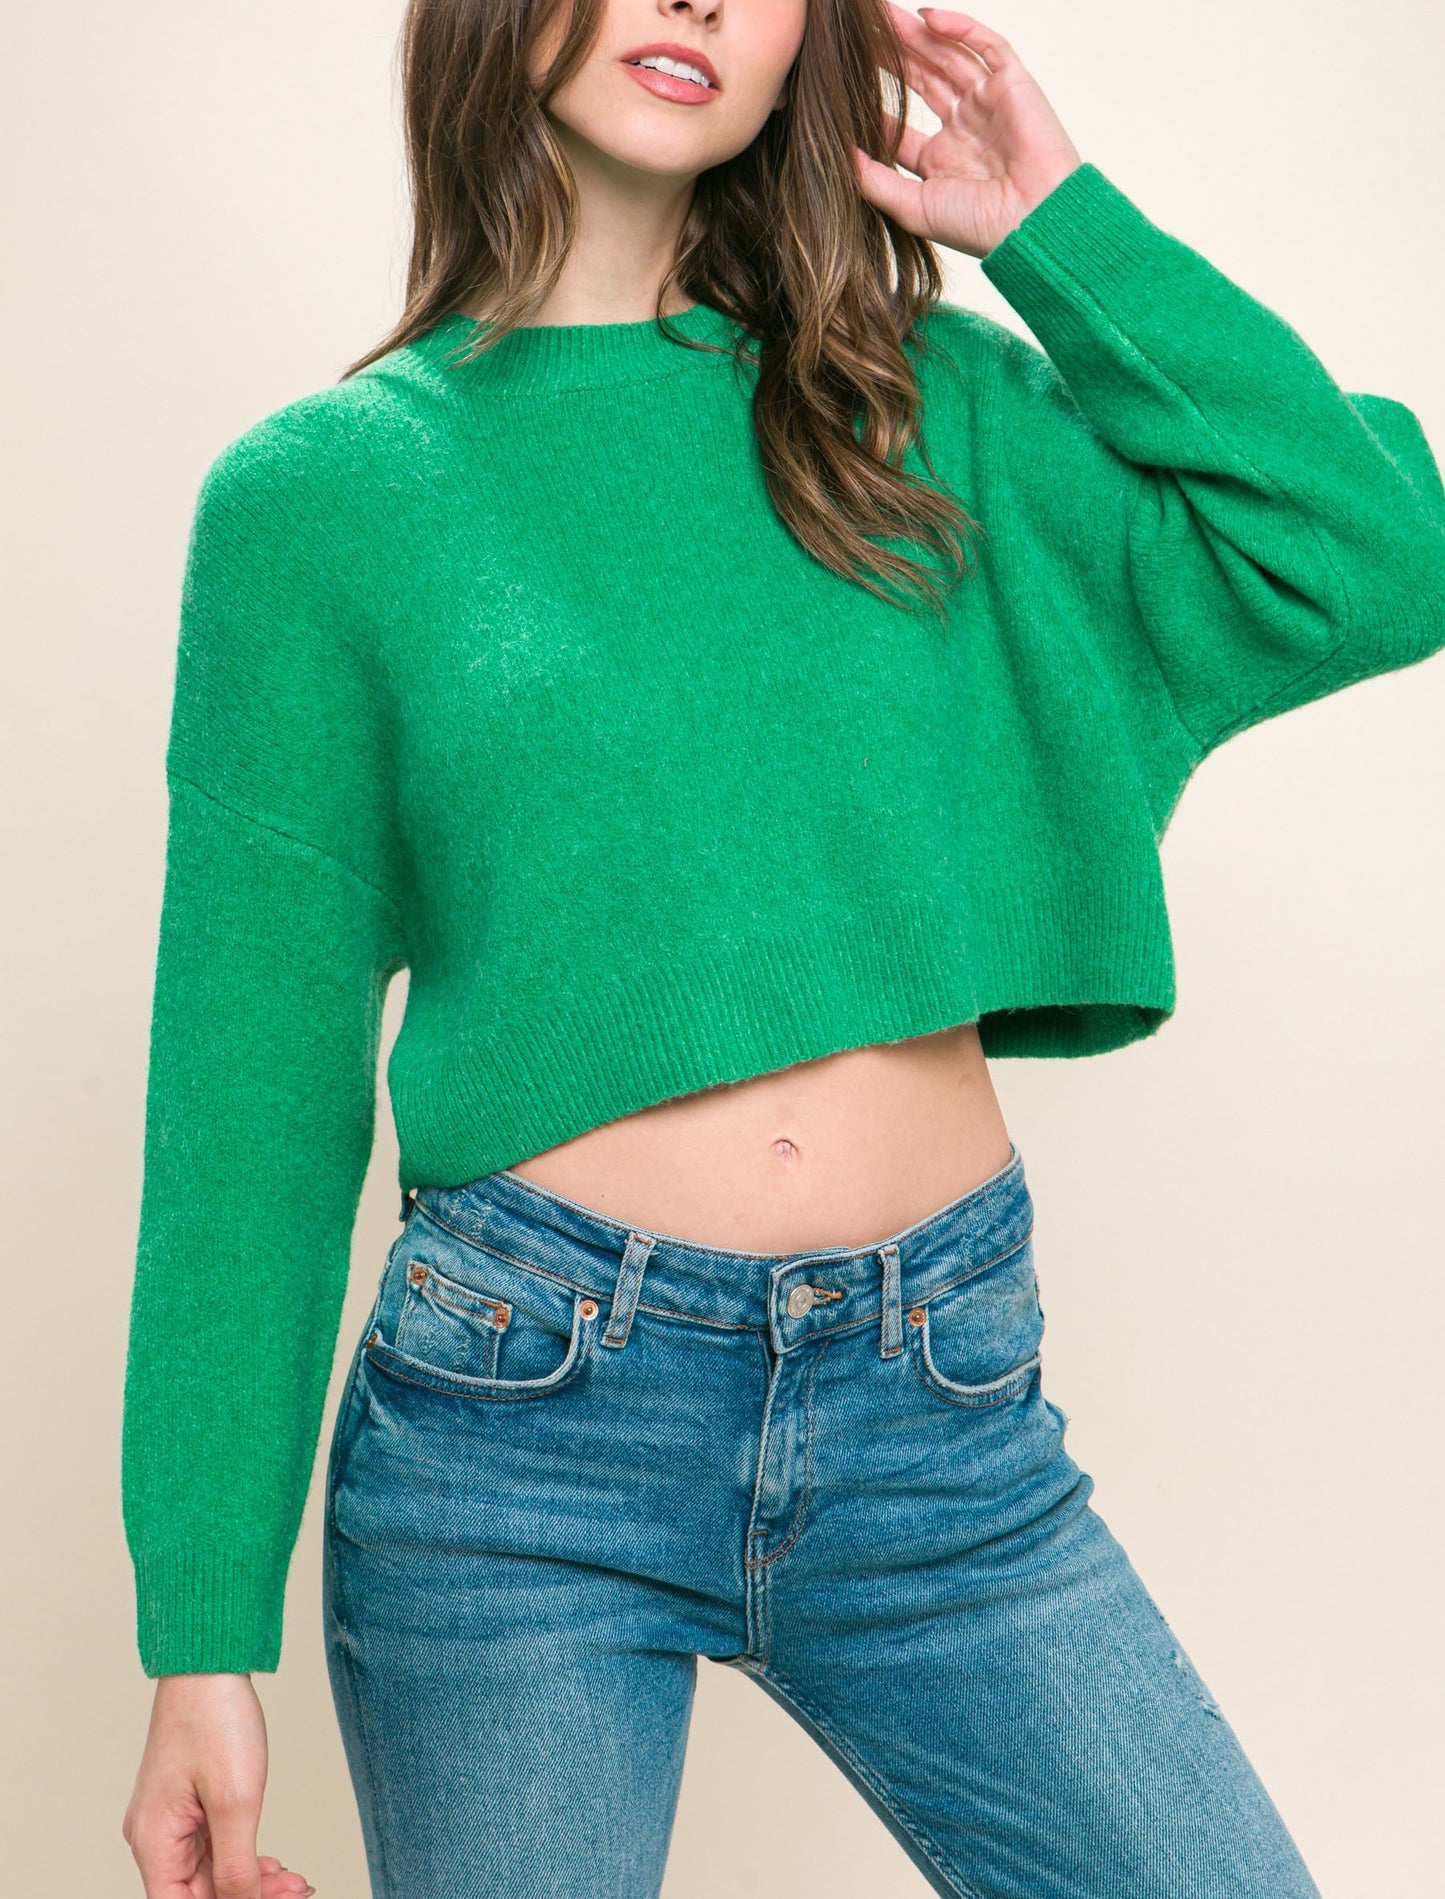 Gracie Knit Crop Sweater